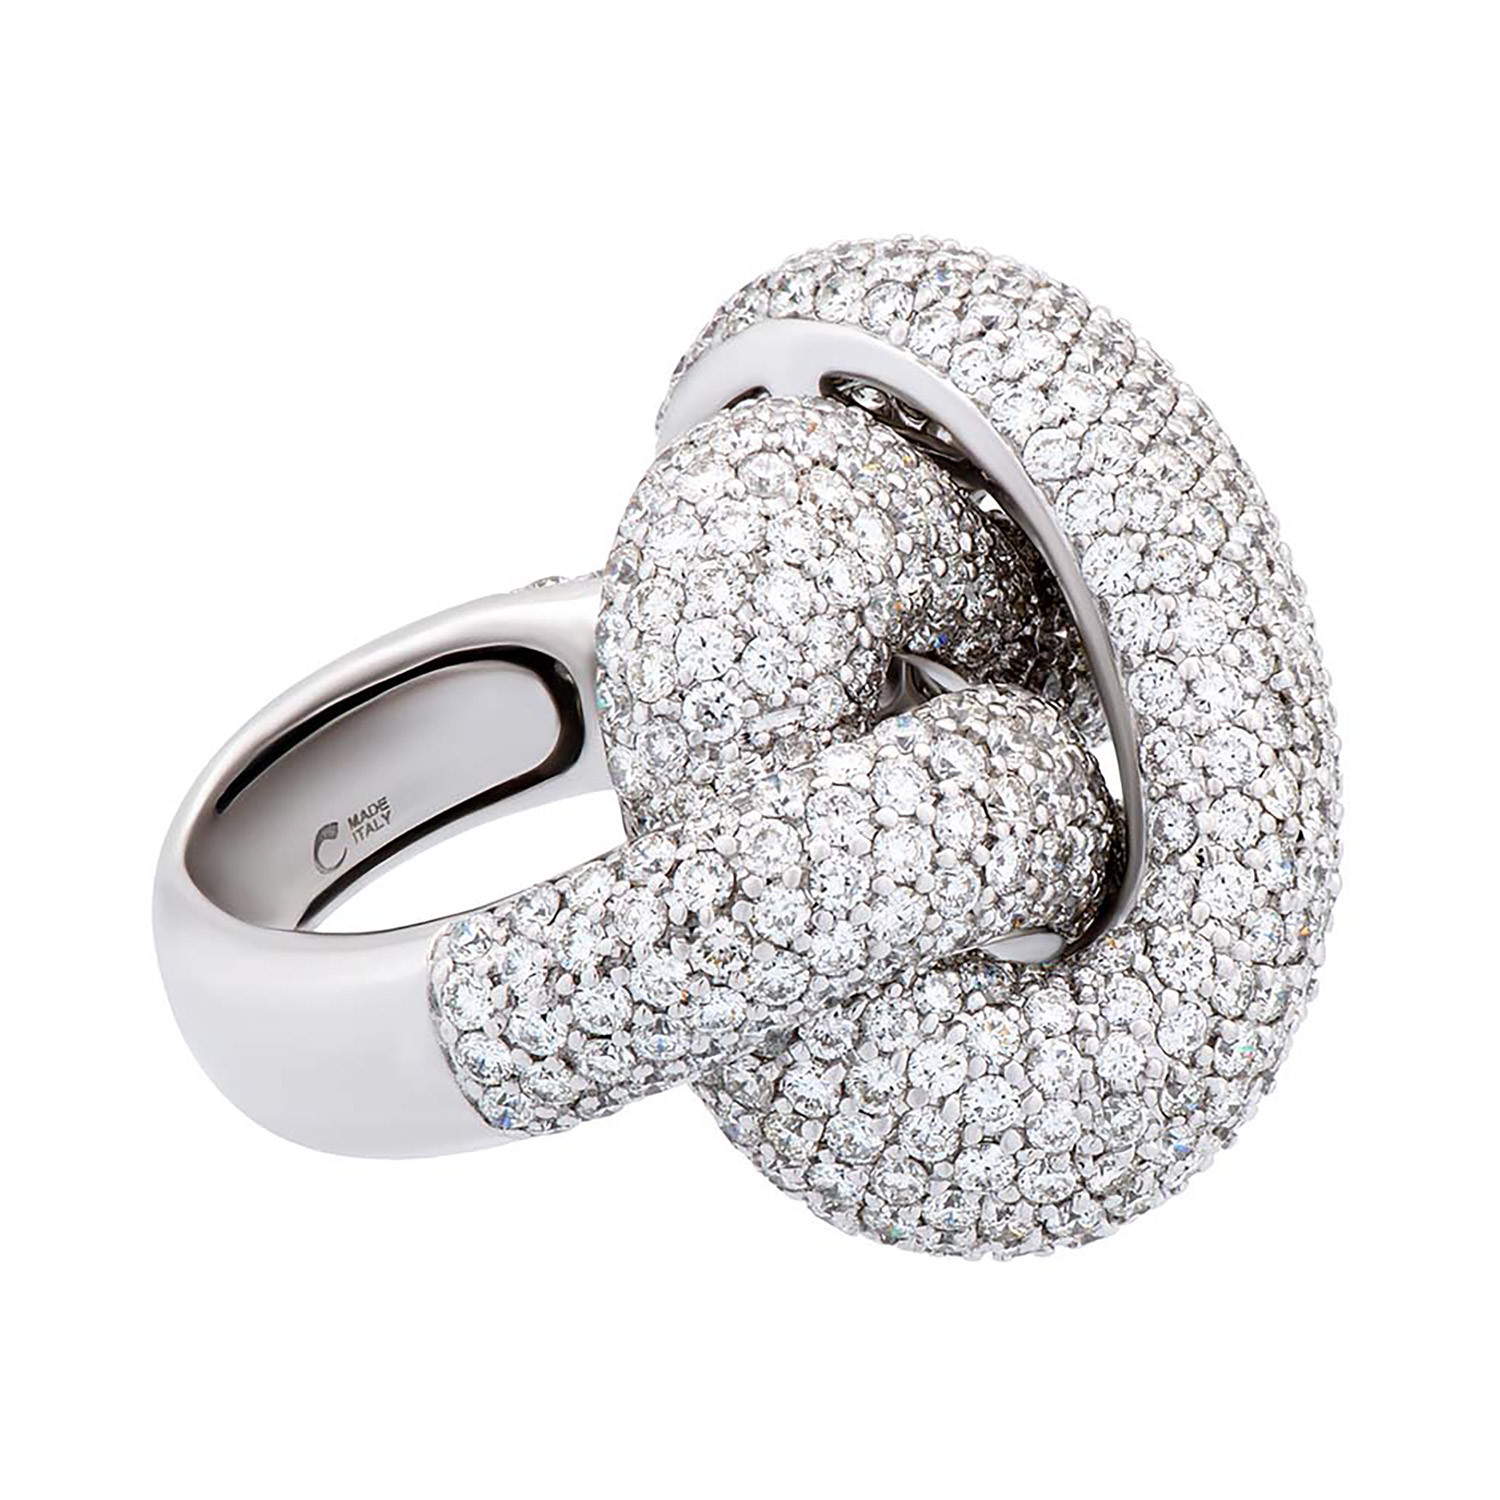 Crivelli 18k White Gold Diamond Ring // 389-VR9944 // Size 7 - Crivelli ...